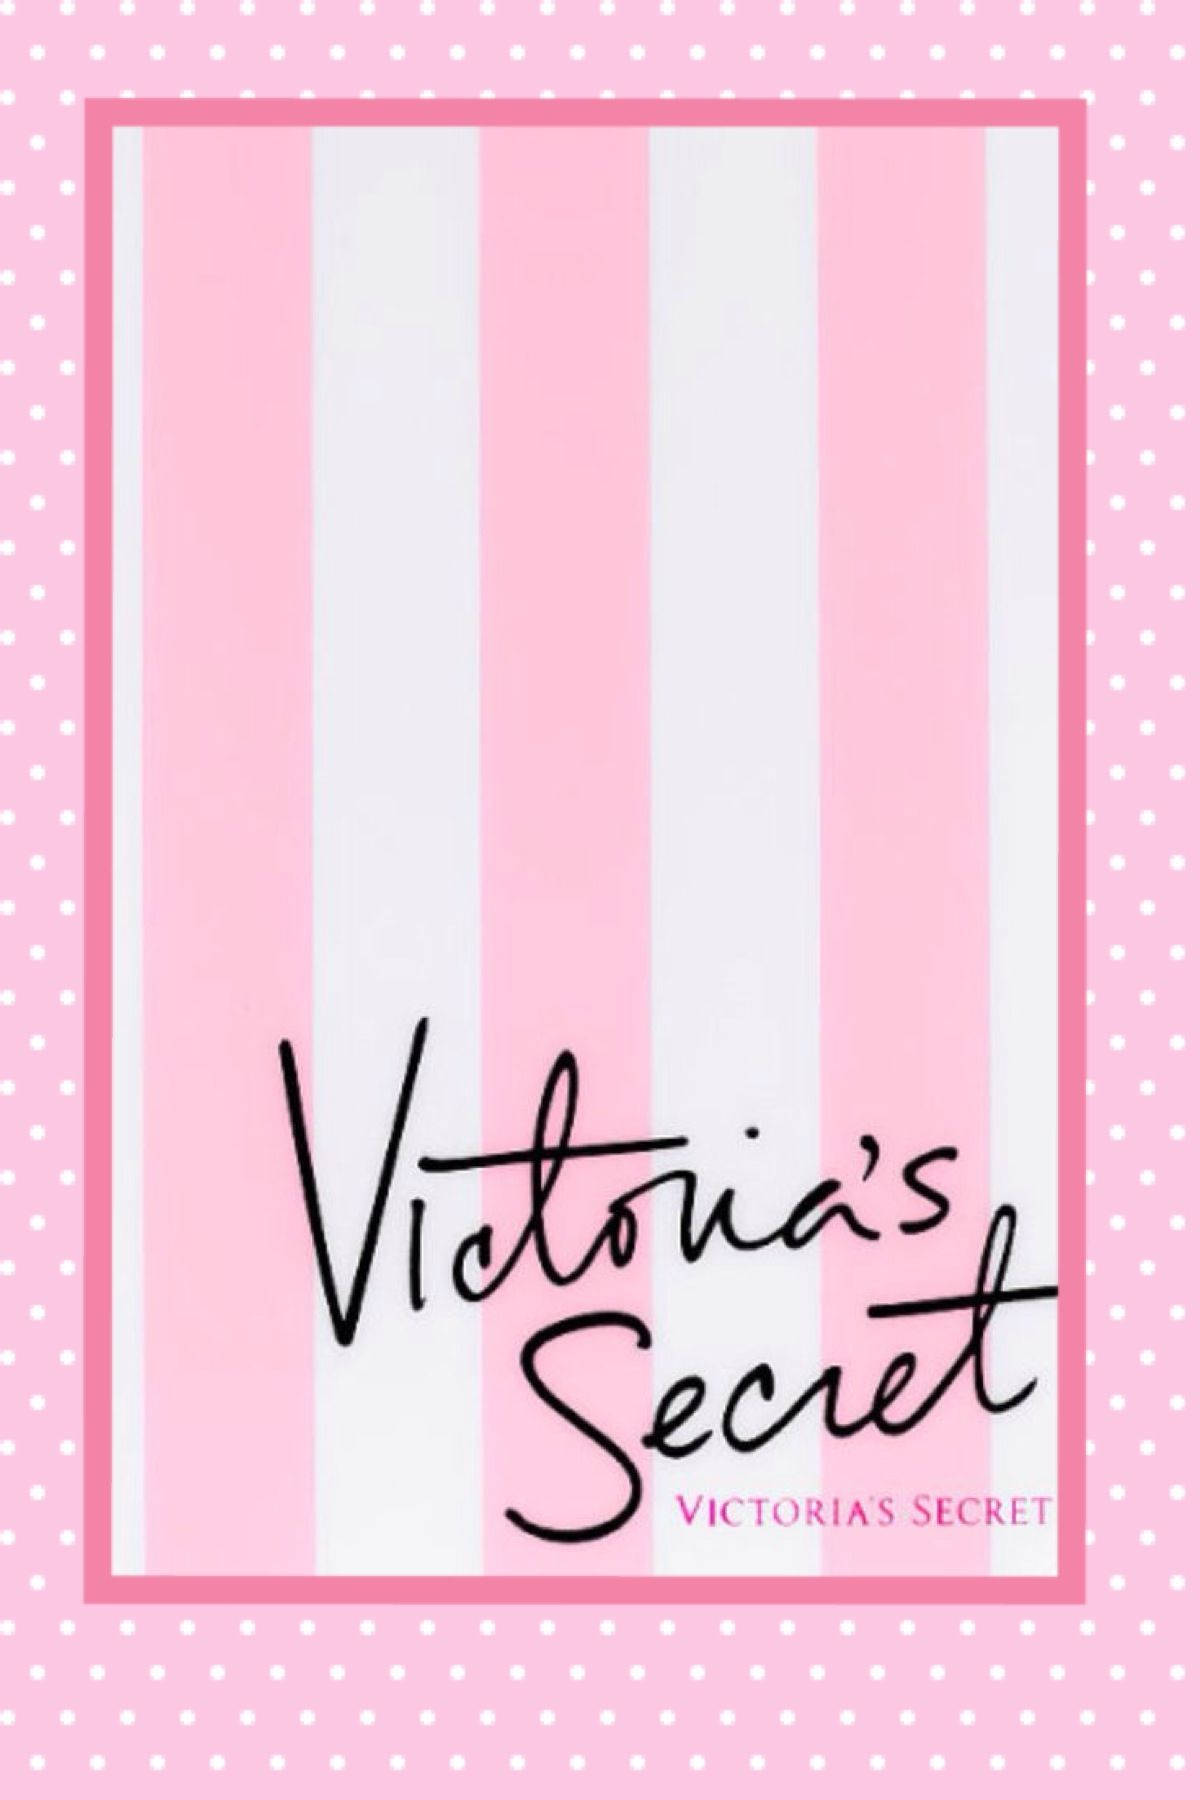 Victoria Secret 1200X1800 Wallpaper and Background Image